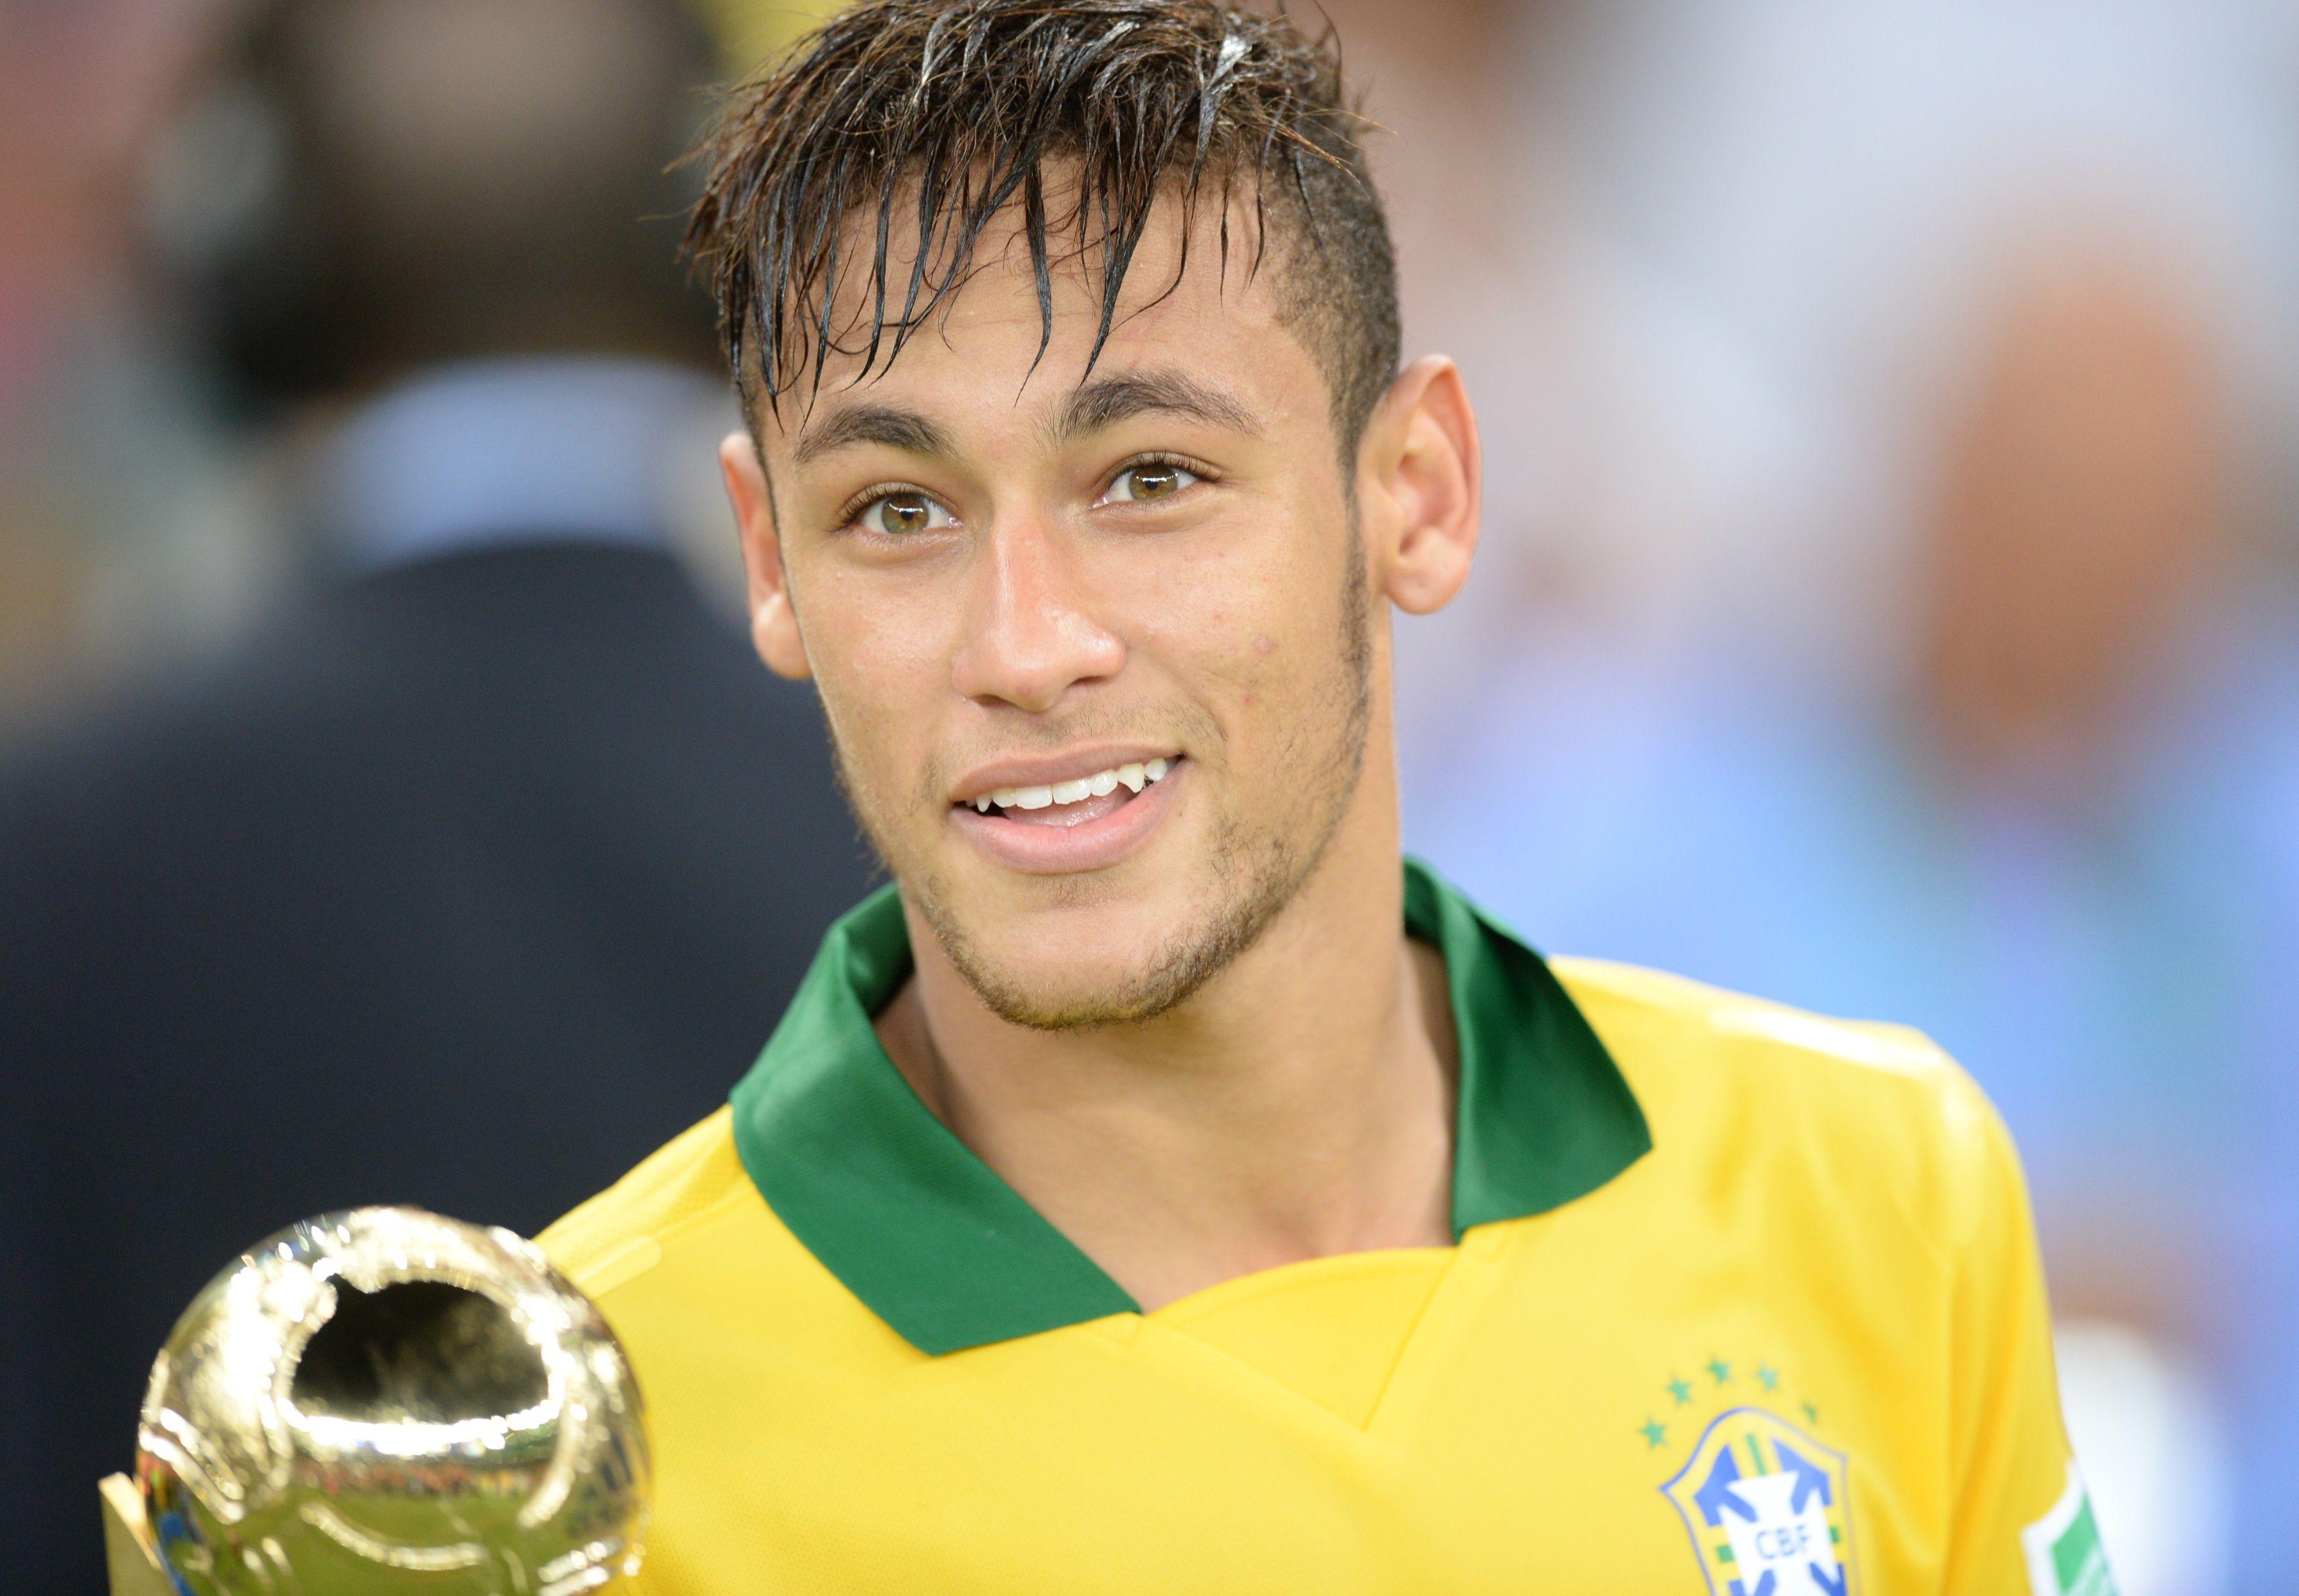 1100x618px Talented Neymar Da Silva